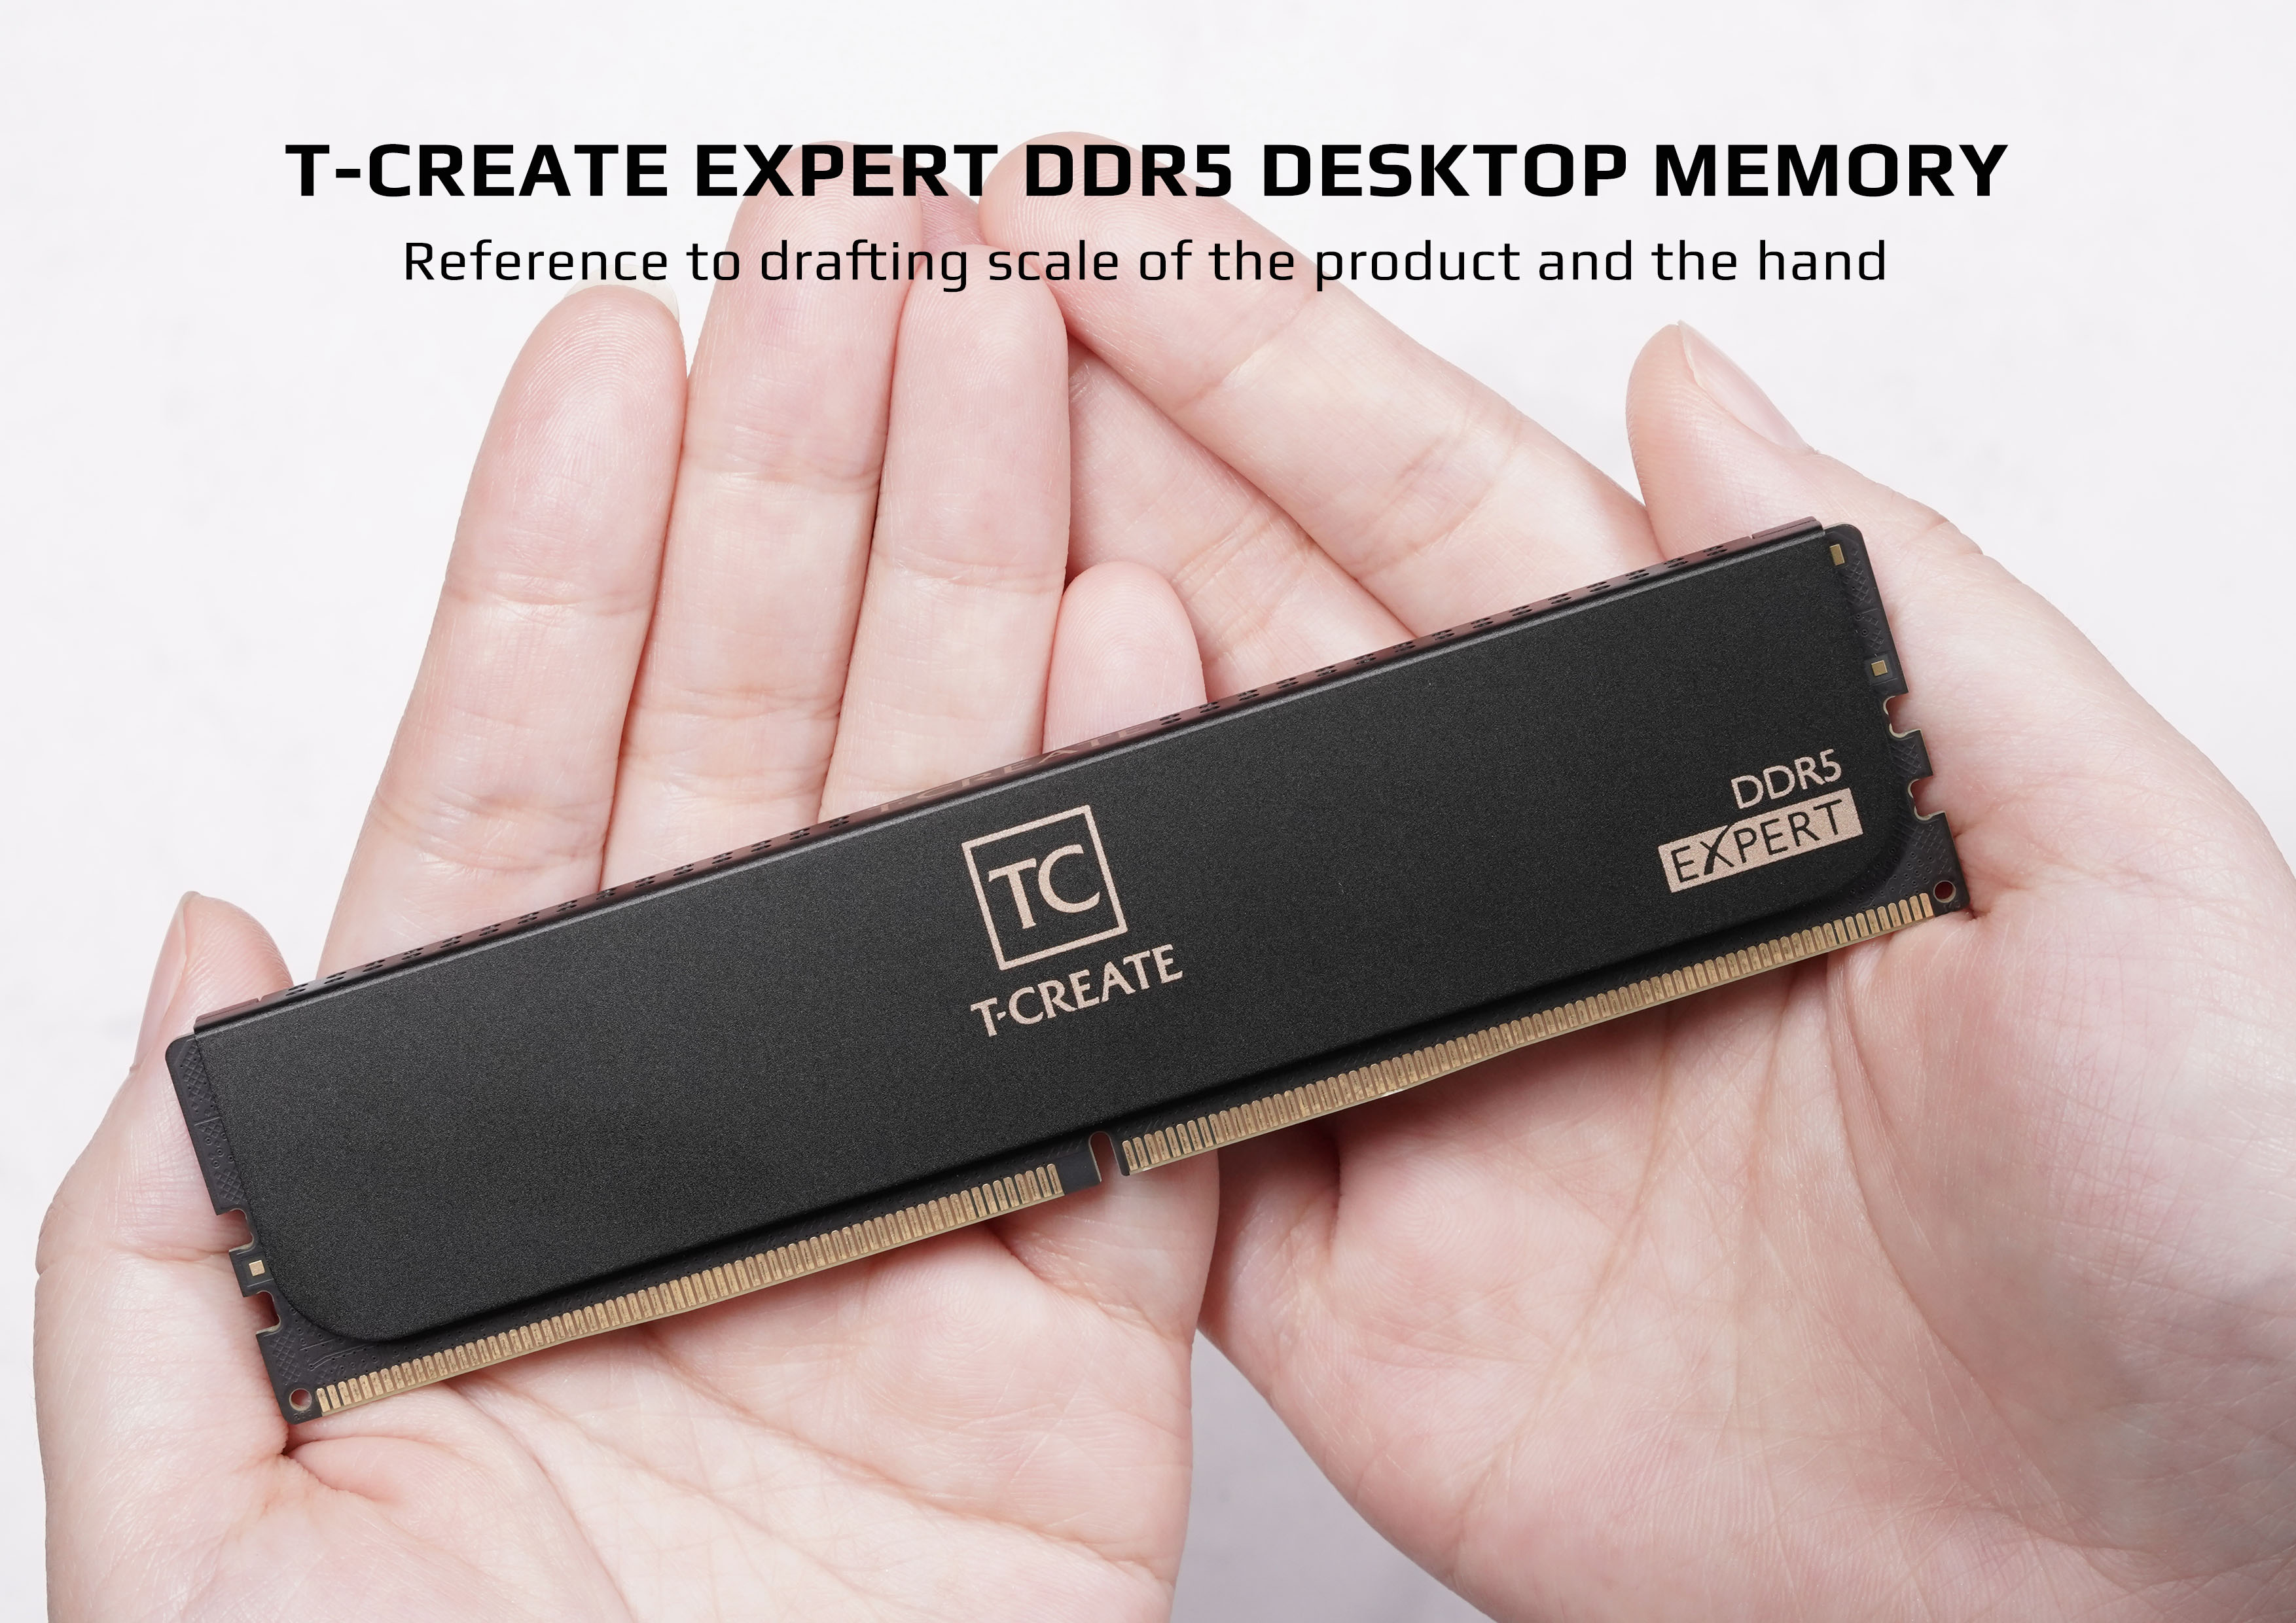 T-CREATE EXPERT DDR5